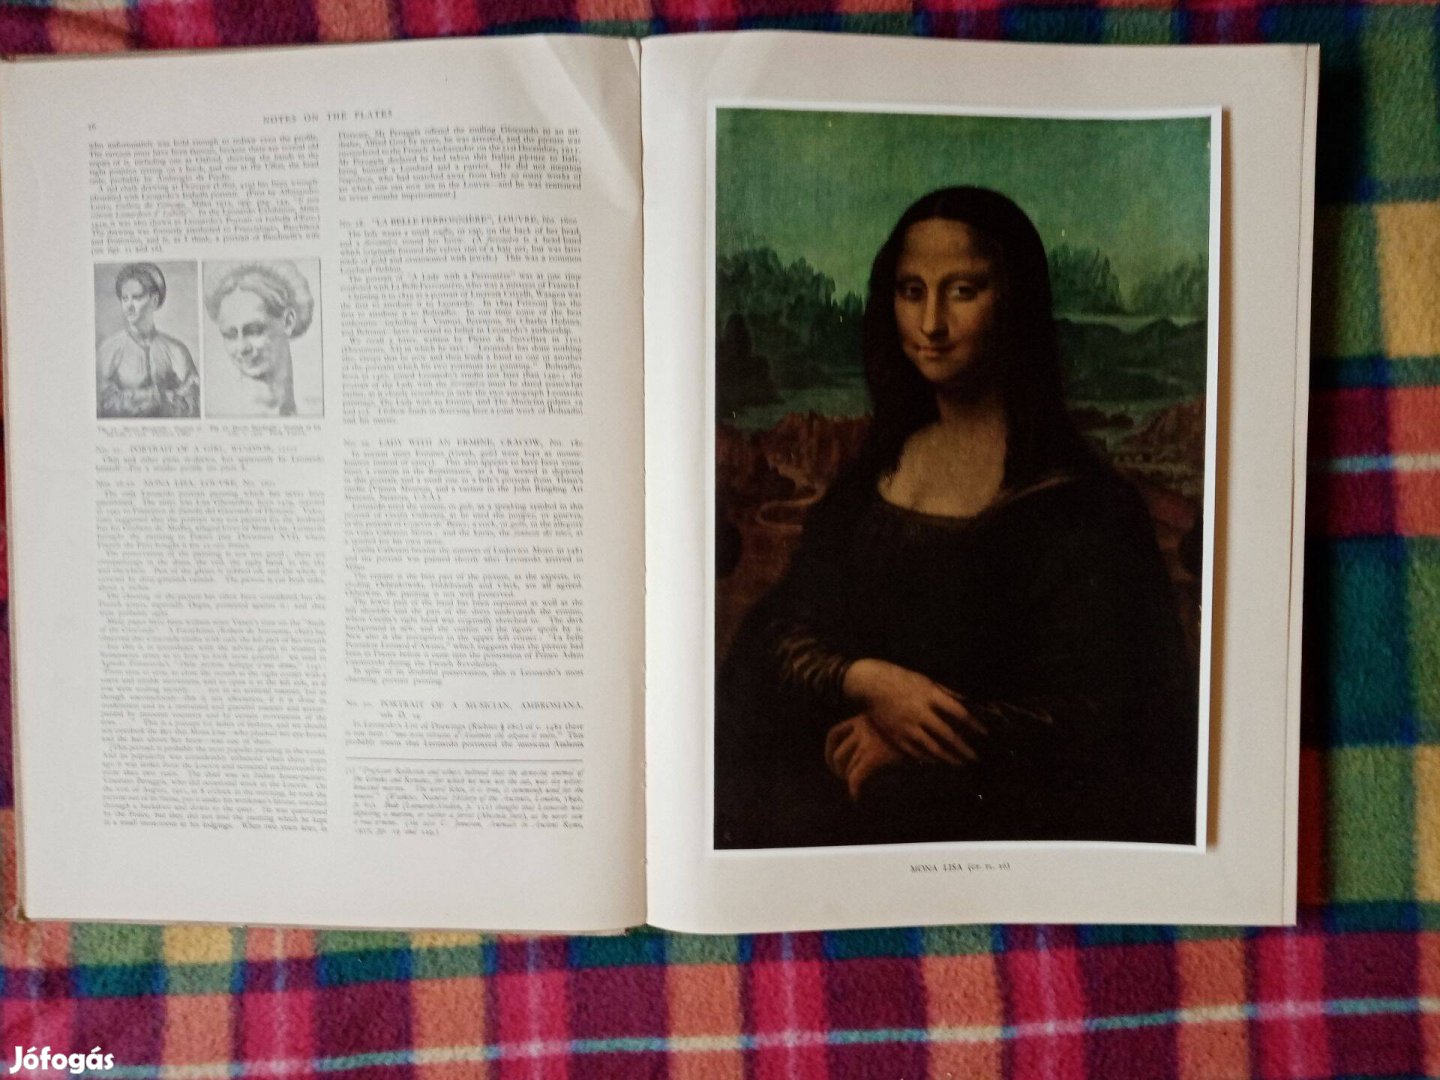 Ludwig Goldscheider: Leonardo Da Vinci - The Artist. Angol Reprodukcio